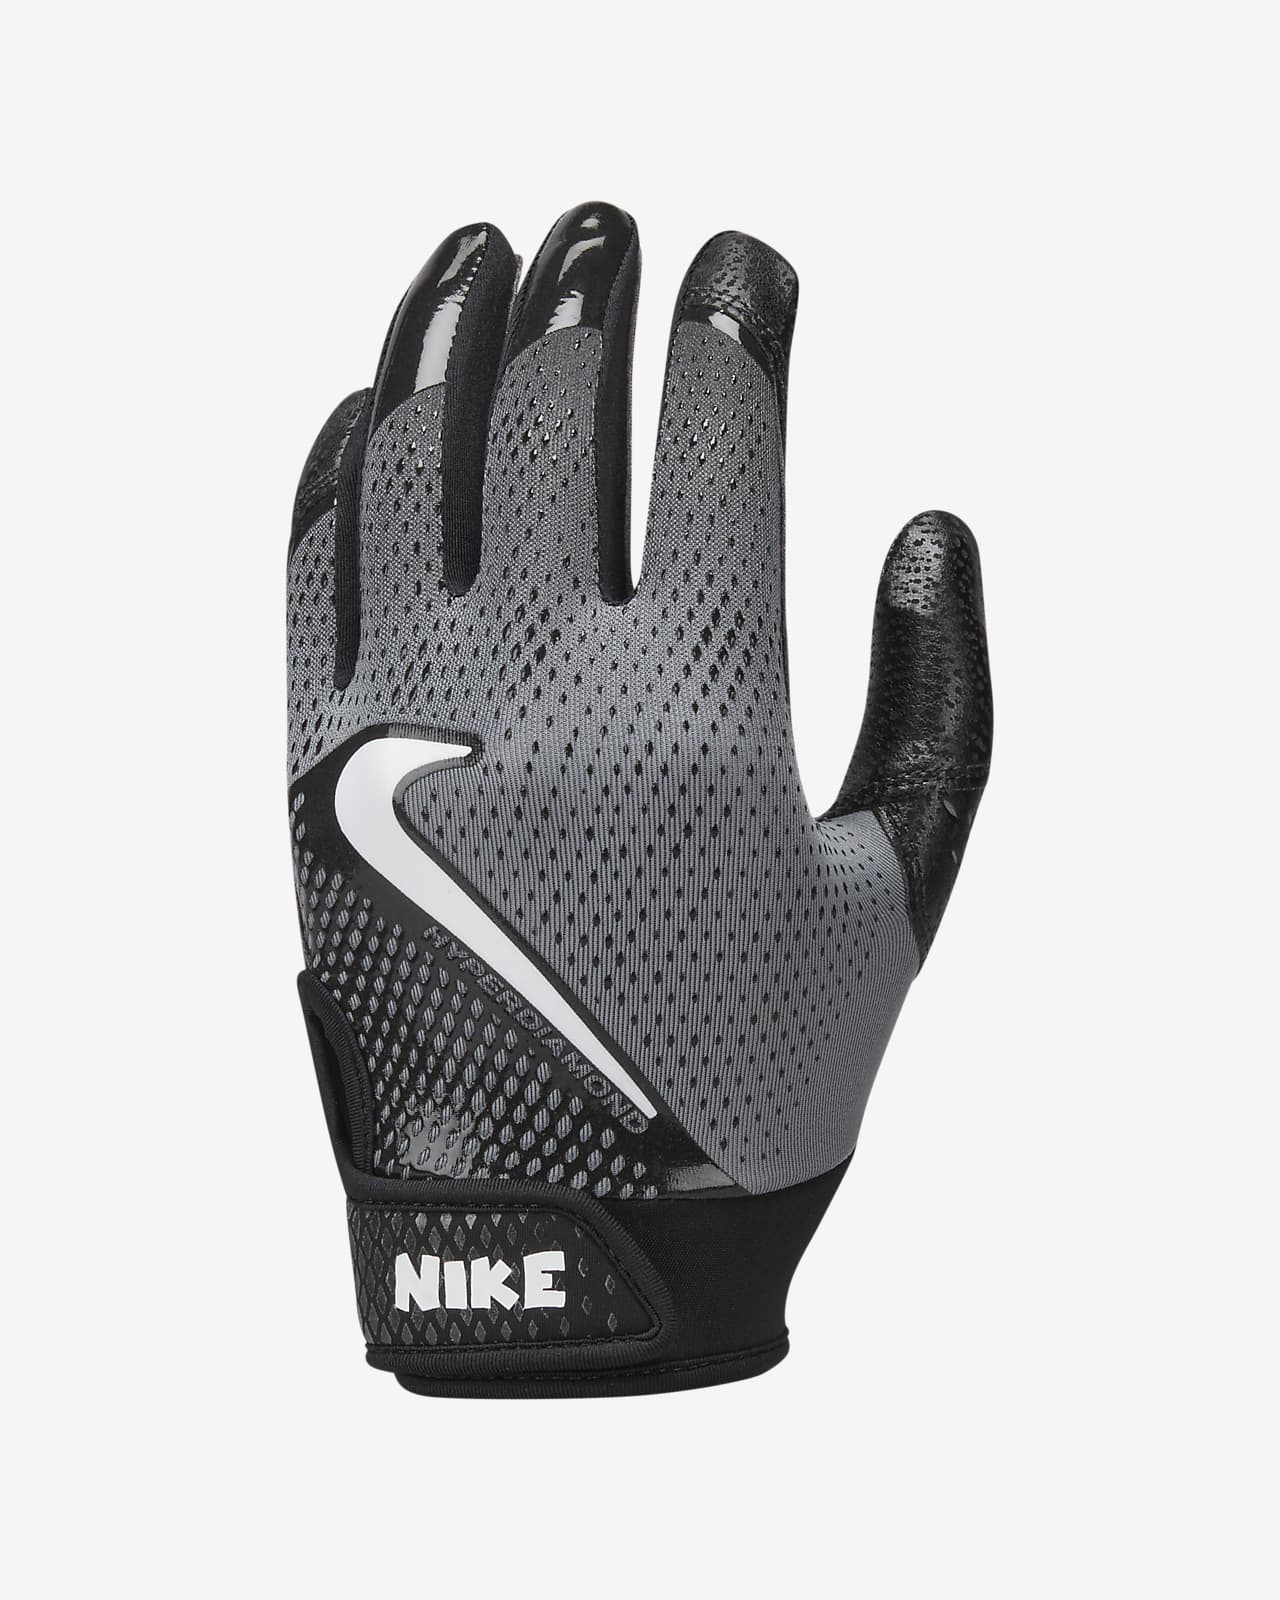 Nike Hyperdiamond Kids' Softball Gloves